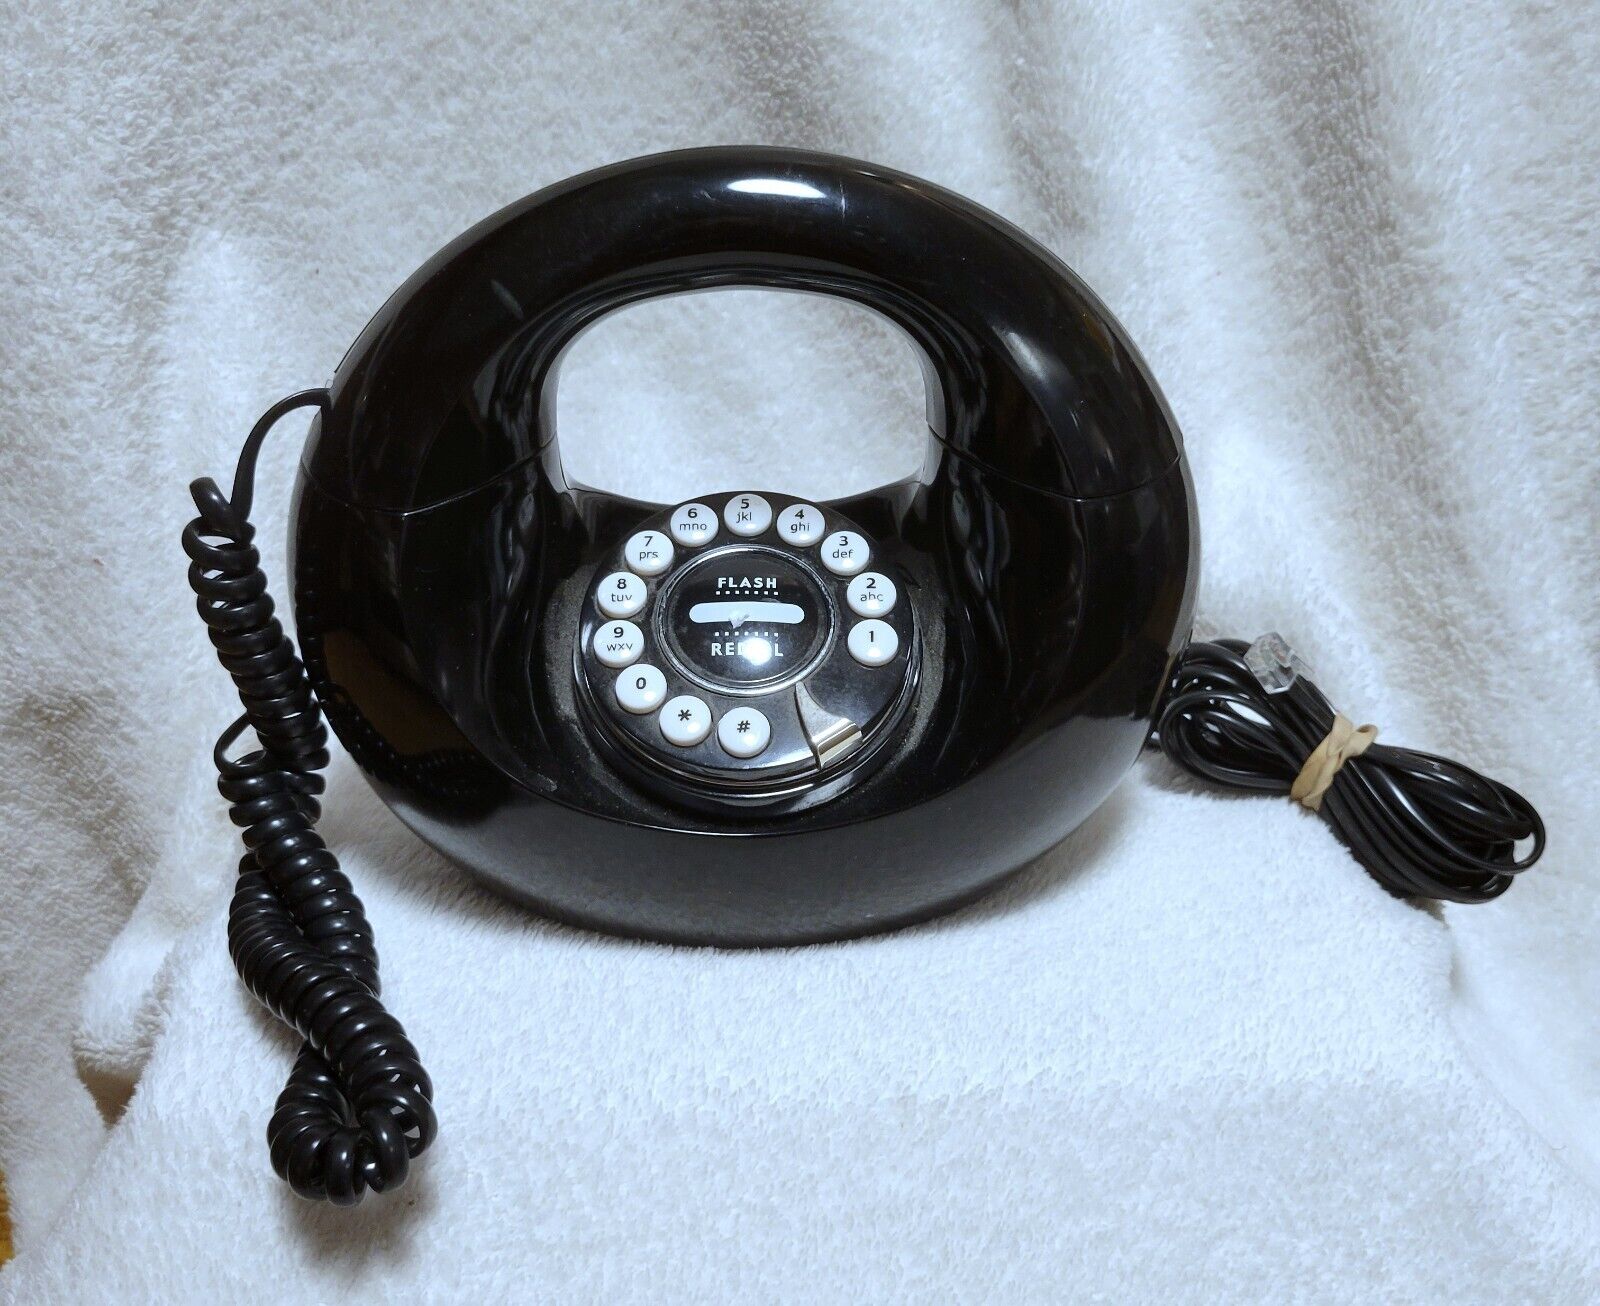 Polyconcept Pushbutton Handbag Black Telephone Vintage